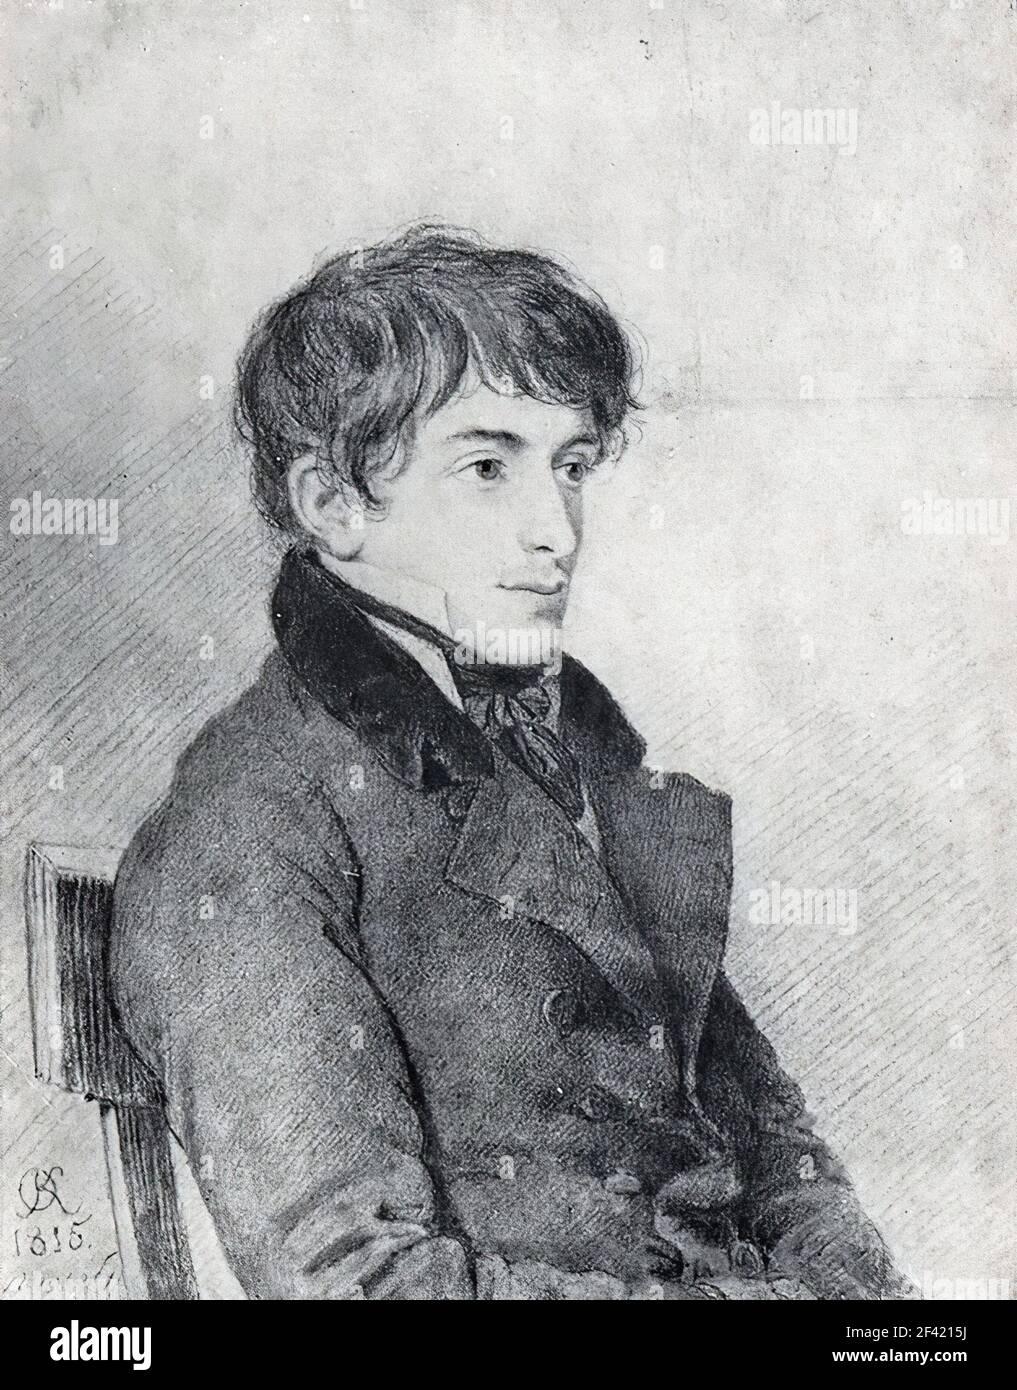 Orest Adamovich Kiprensky - Portrait Nikit Mikhailovich Muraviev 1815 Stock Photo